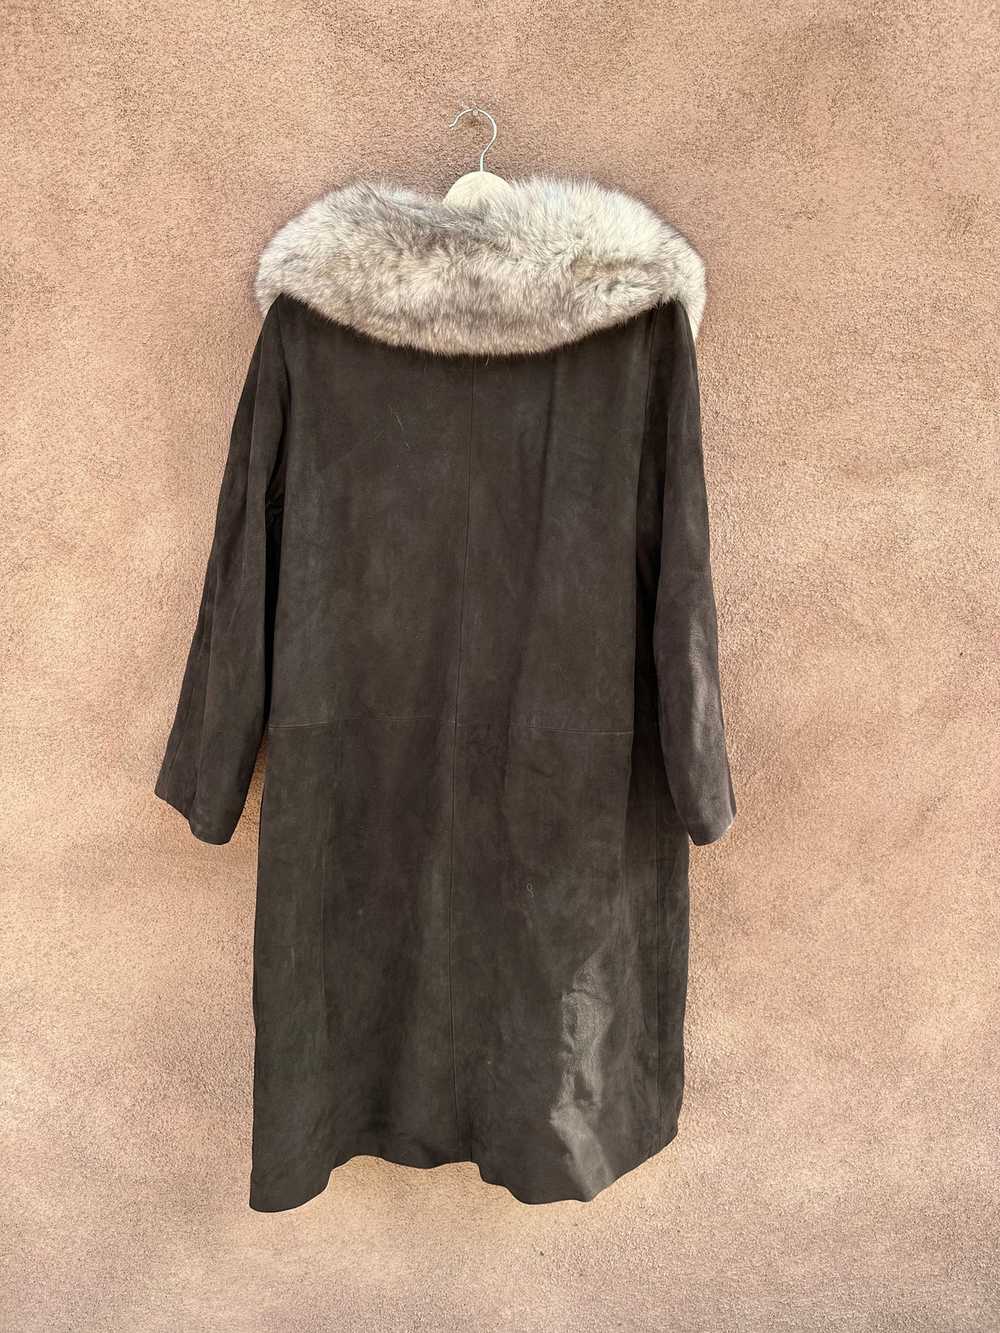 Dark Brown Suede and Rabbit Fur Long Coat - image 3